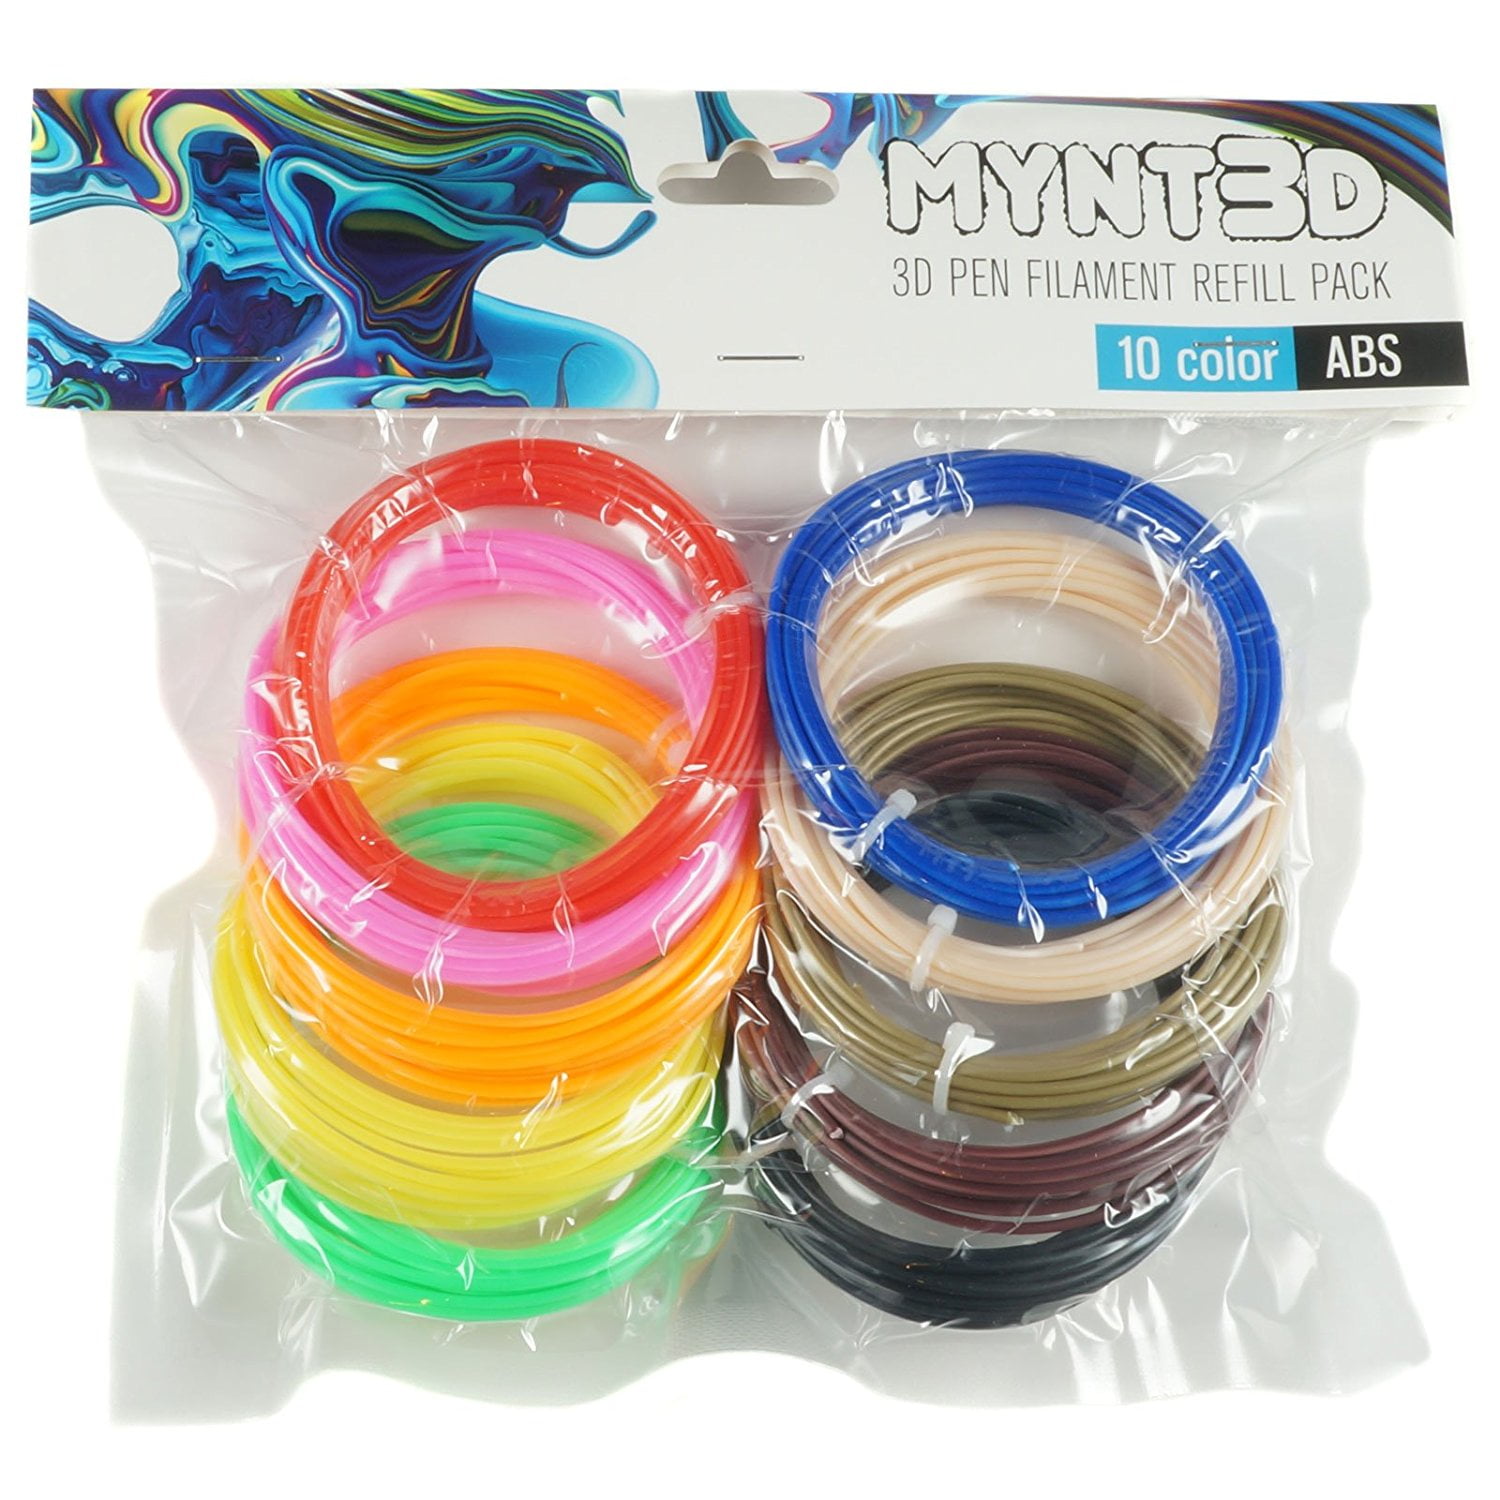 MYNT3D ABS 3D Pen Filament Refill Pack (10 Color, 3M Each)